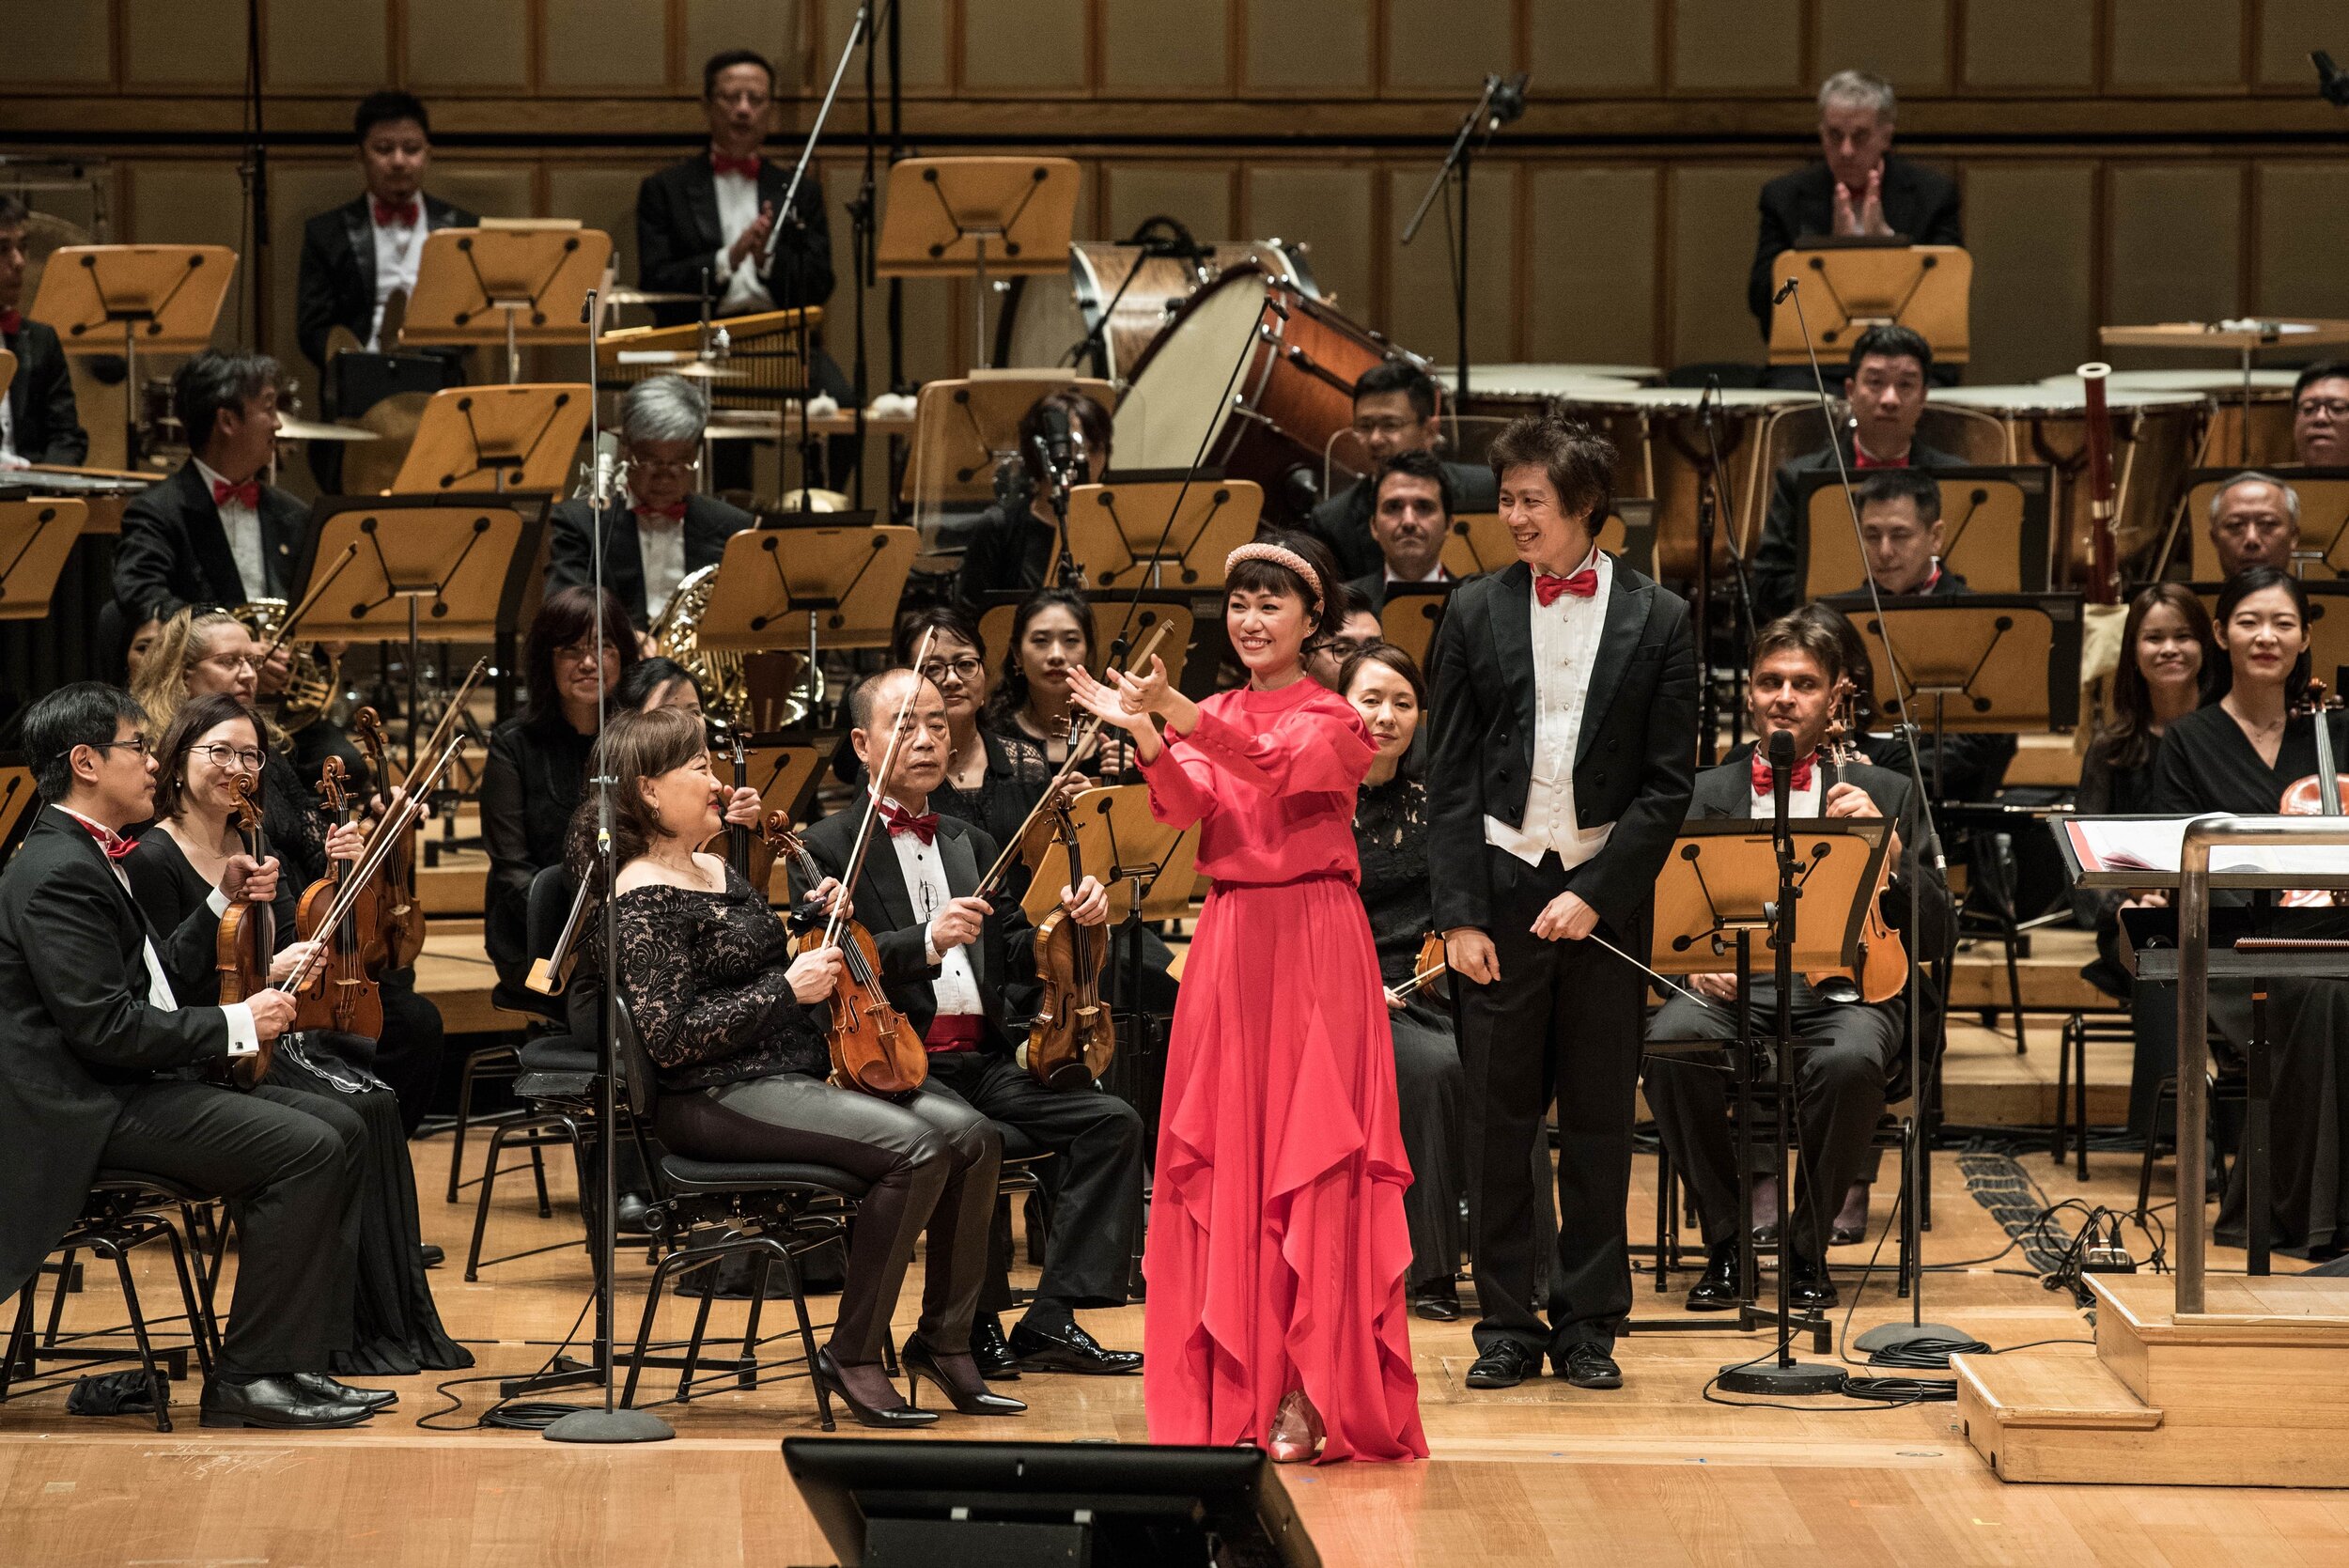  Photo Credit: Singapore Symphony Orchestra, Jack Yam 